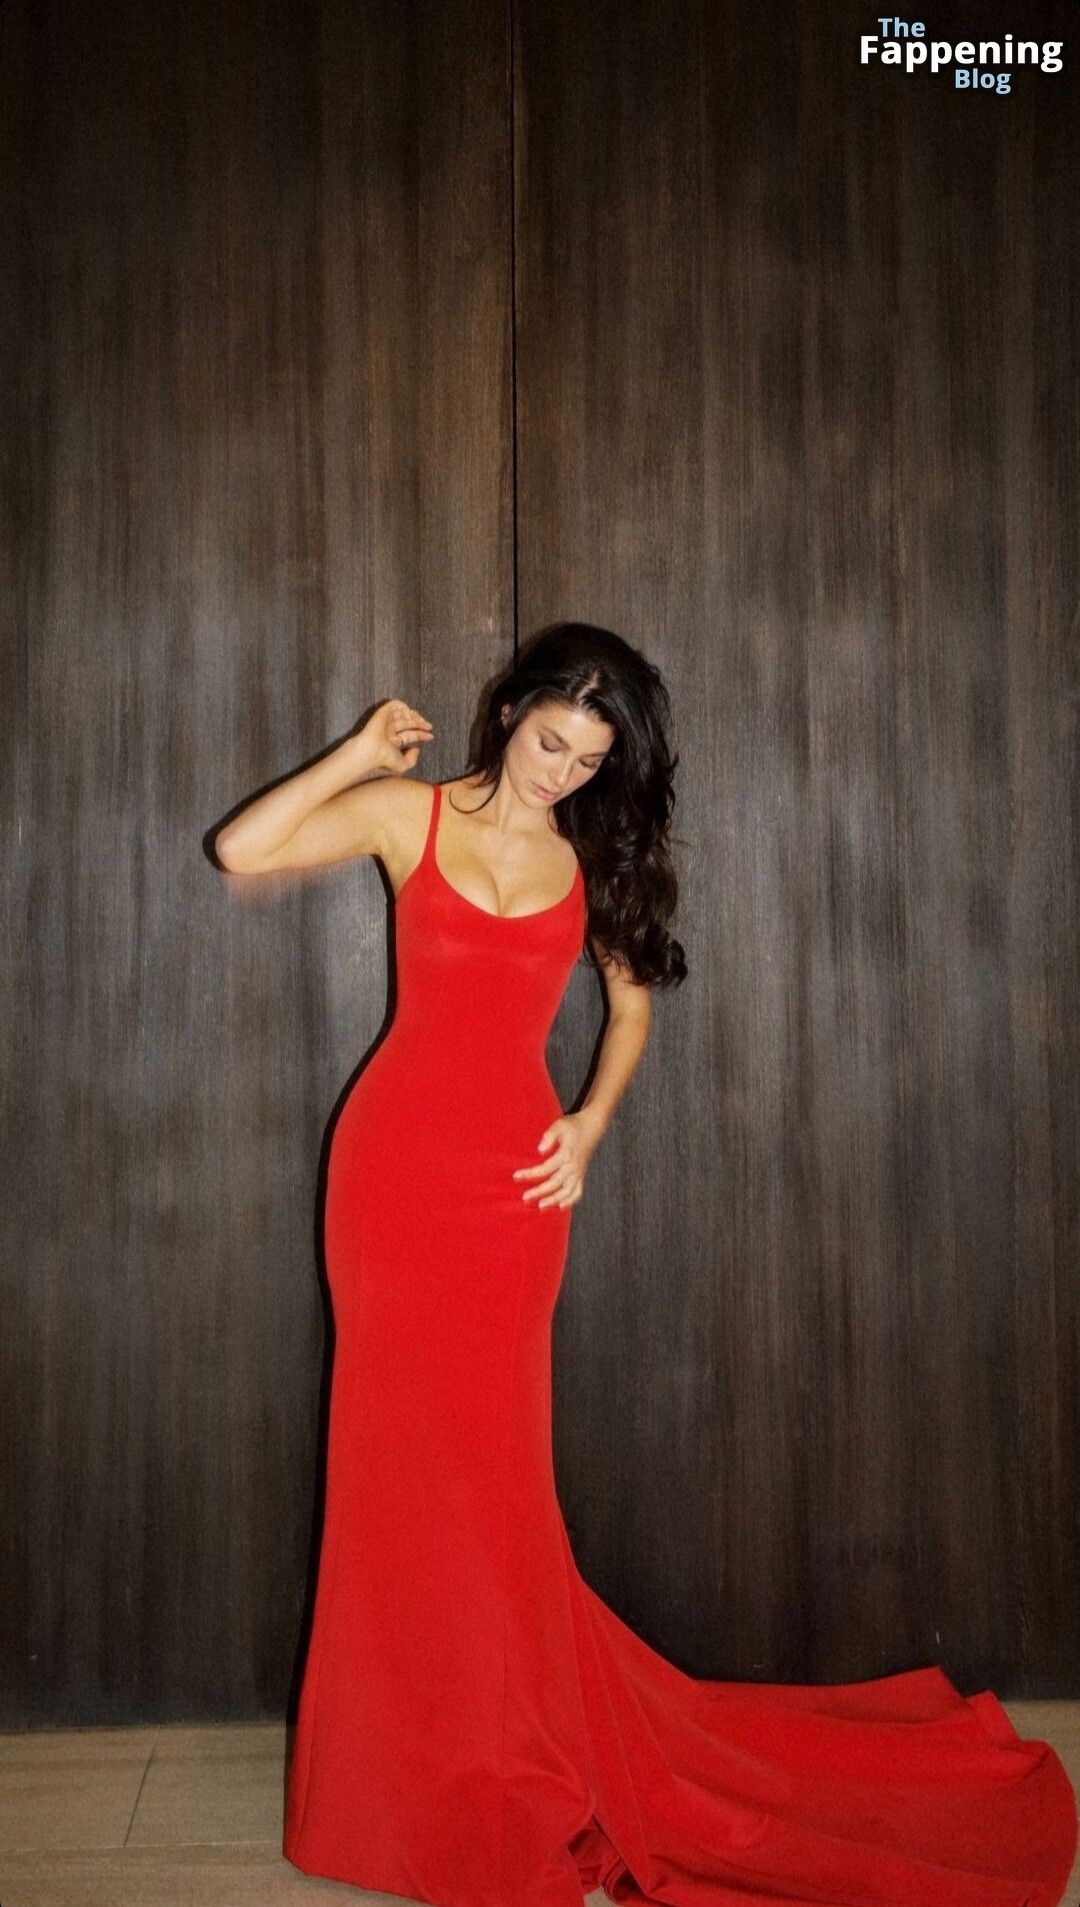 Camila-Morrone-Sexy-6-The-Fappening-Blog.jpg